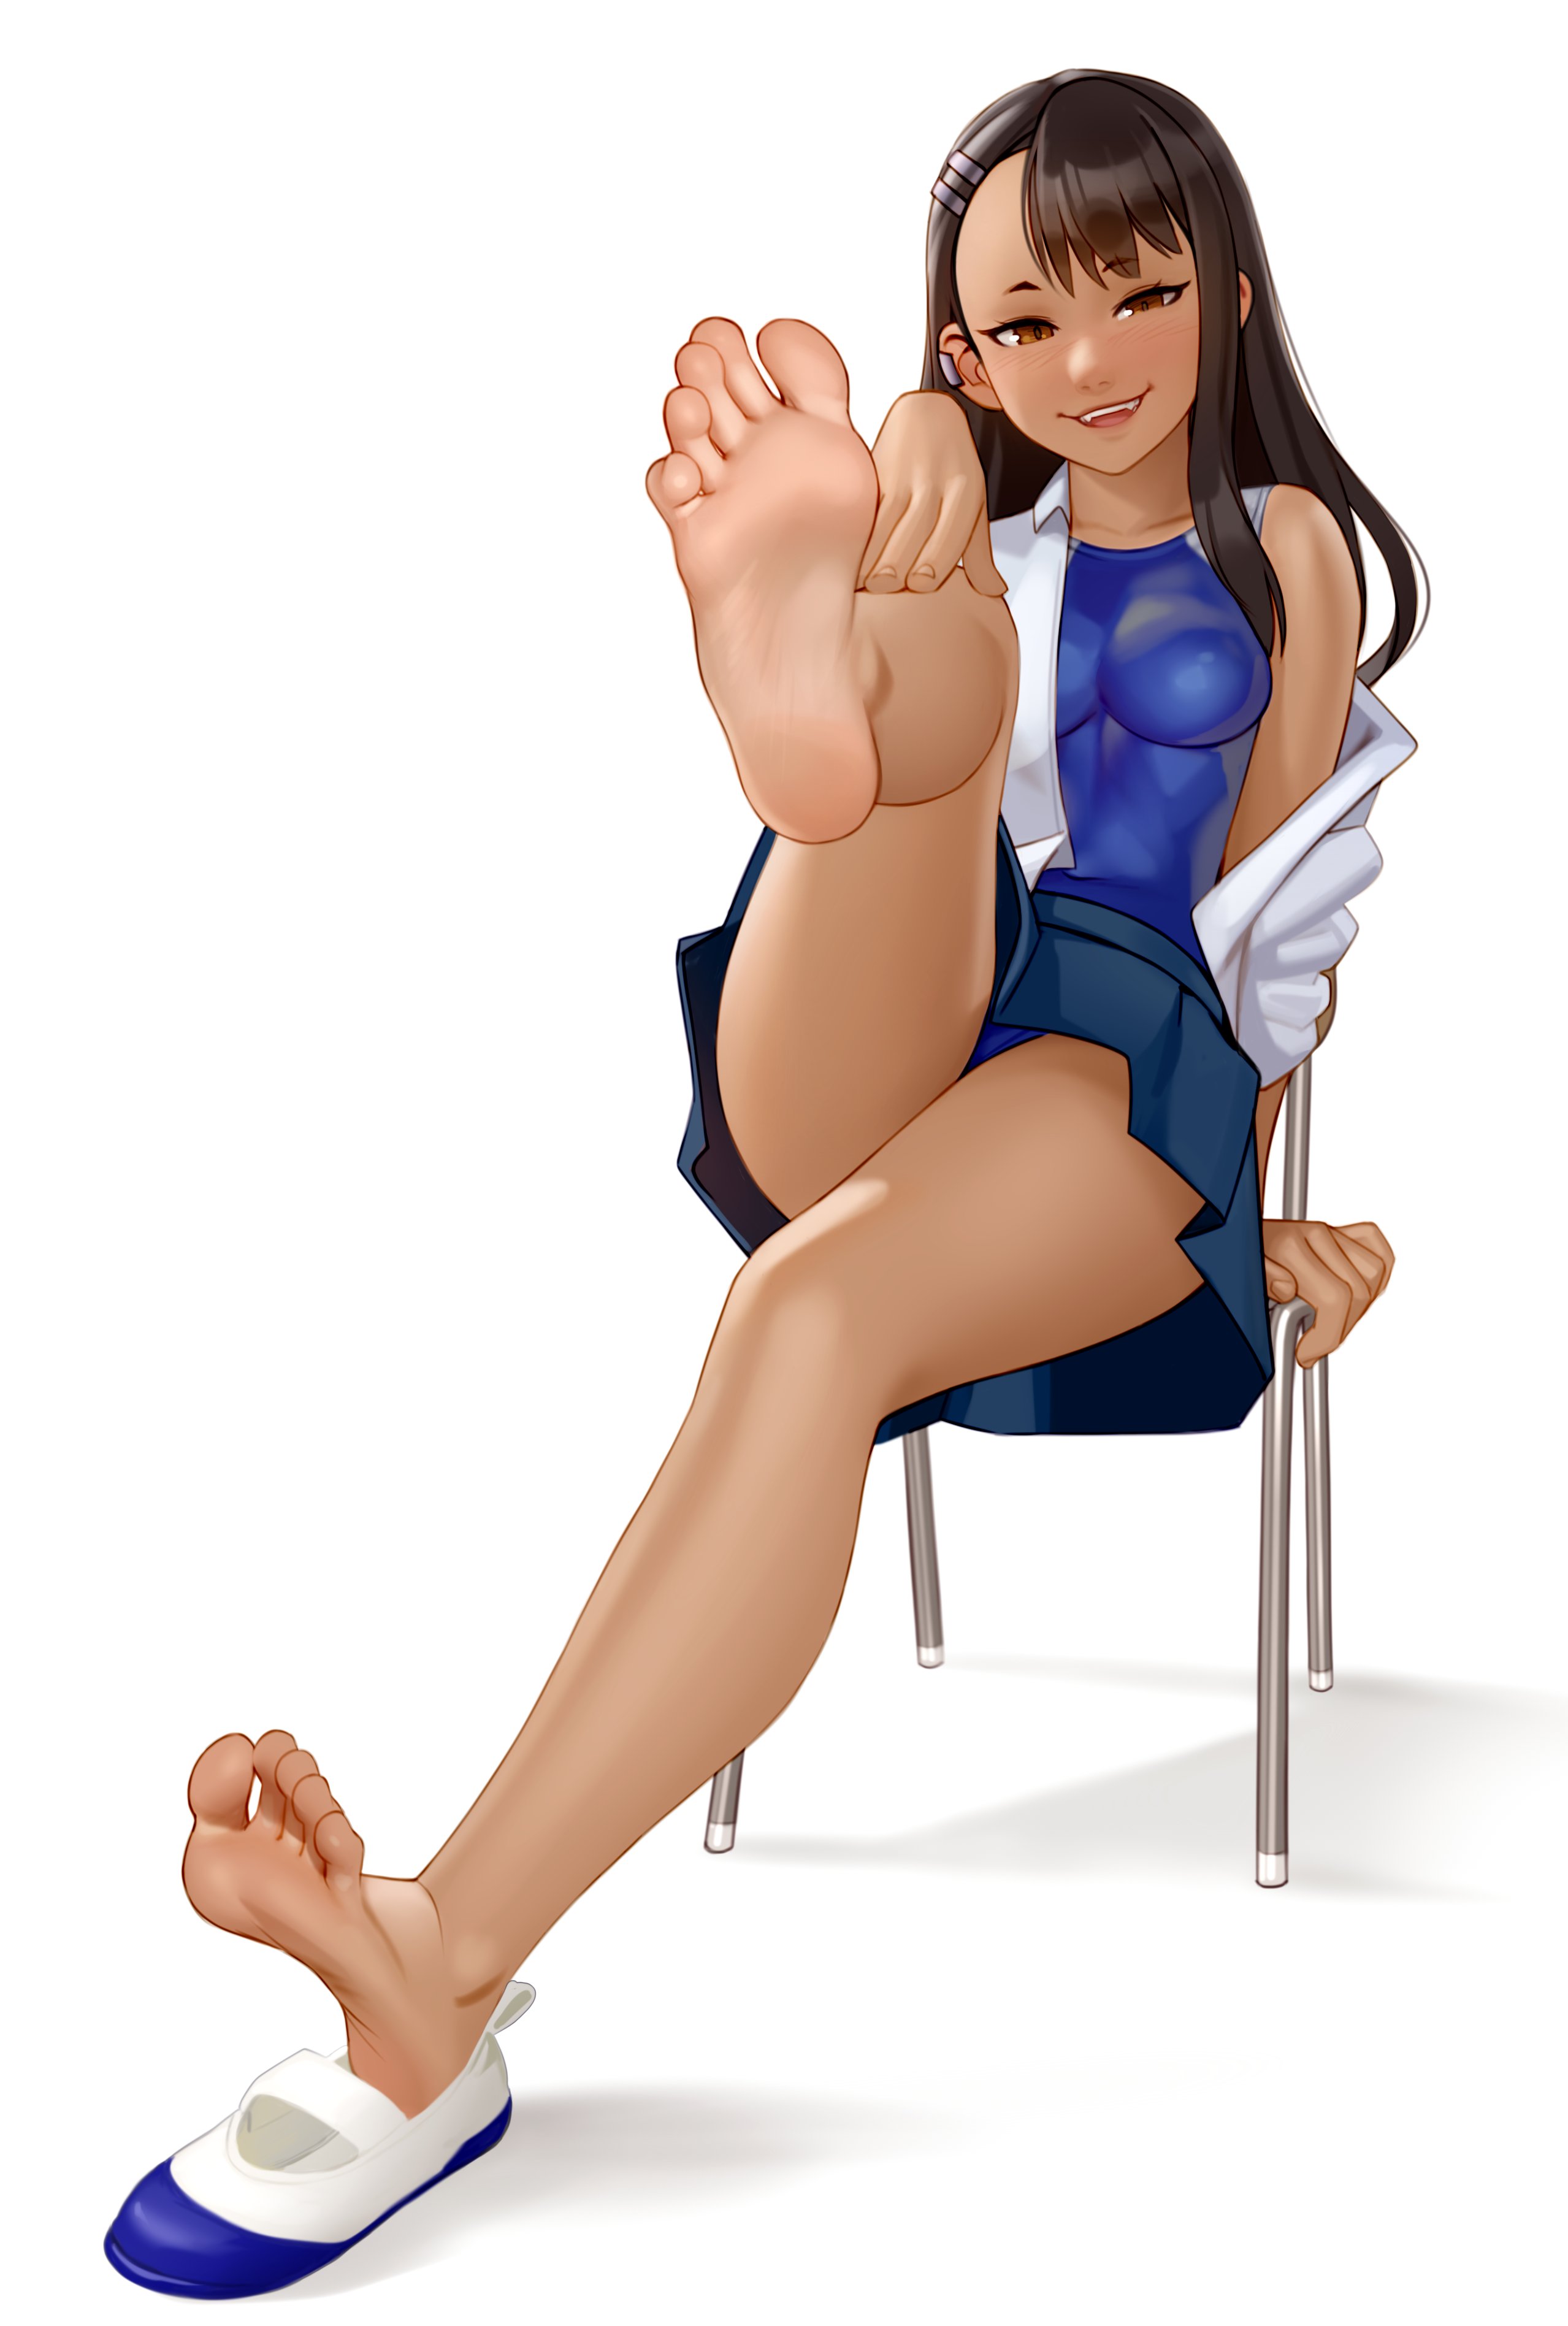 Anime 2557x3793 Kairunoburogu feet brunette sitting anime anime girls Pleas...